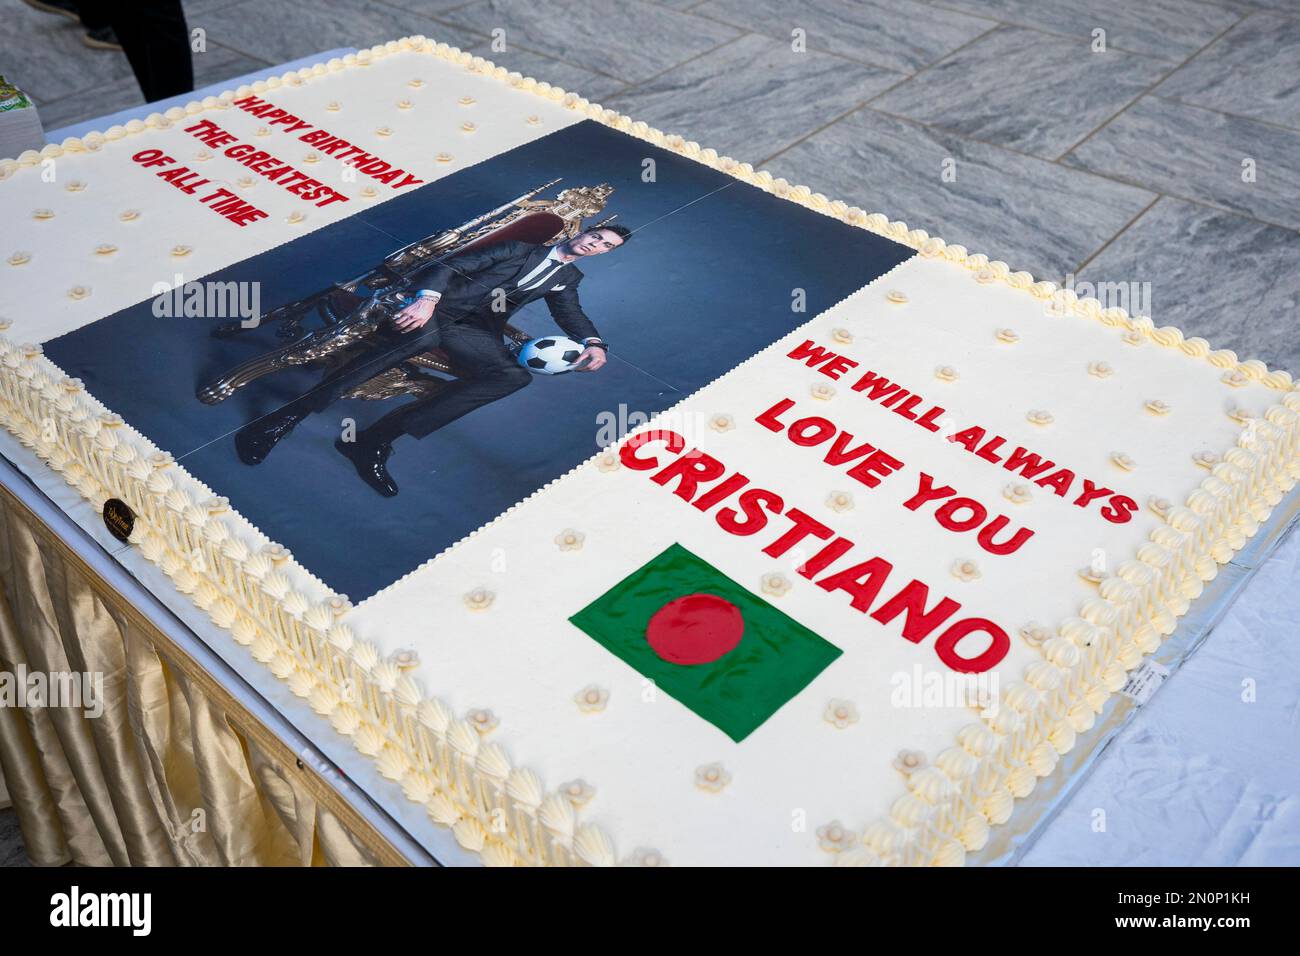 La'Braco Bandra - CR7 Cristiano Ronaldo Manchester United F.C Theme Cake  Football Theme Cake 2 Tier Cake Customised Cake @la_braco The Taste Of  Celebrations!! Cakes & Desserts Hill Road Bandra (w) For